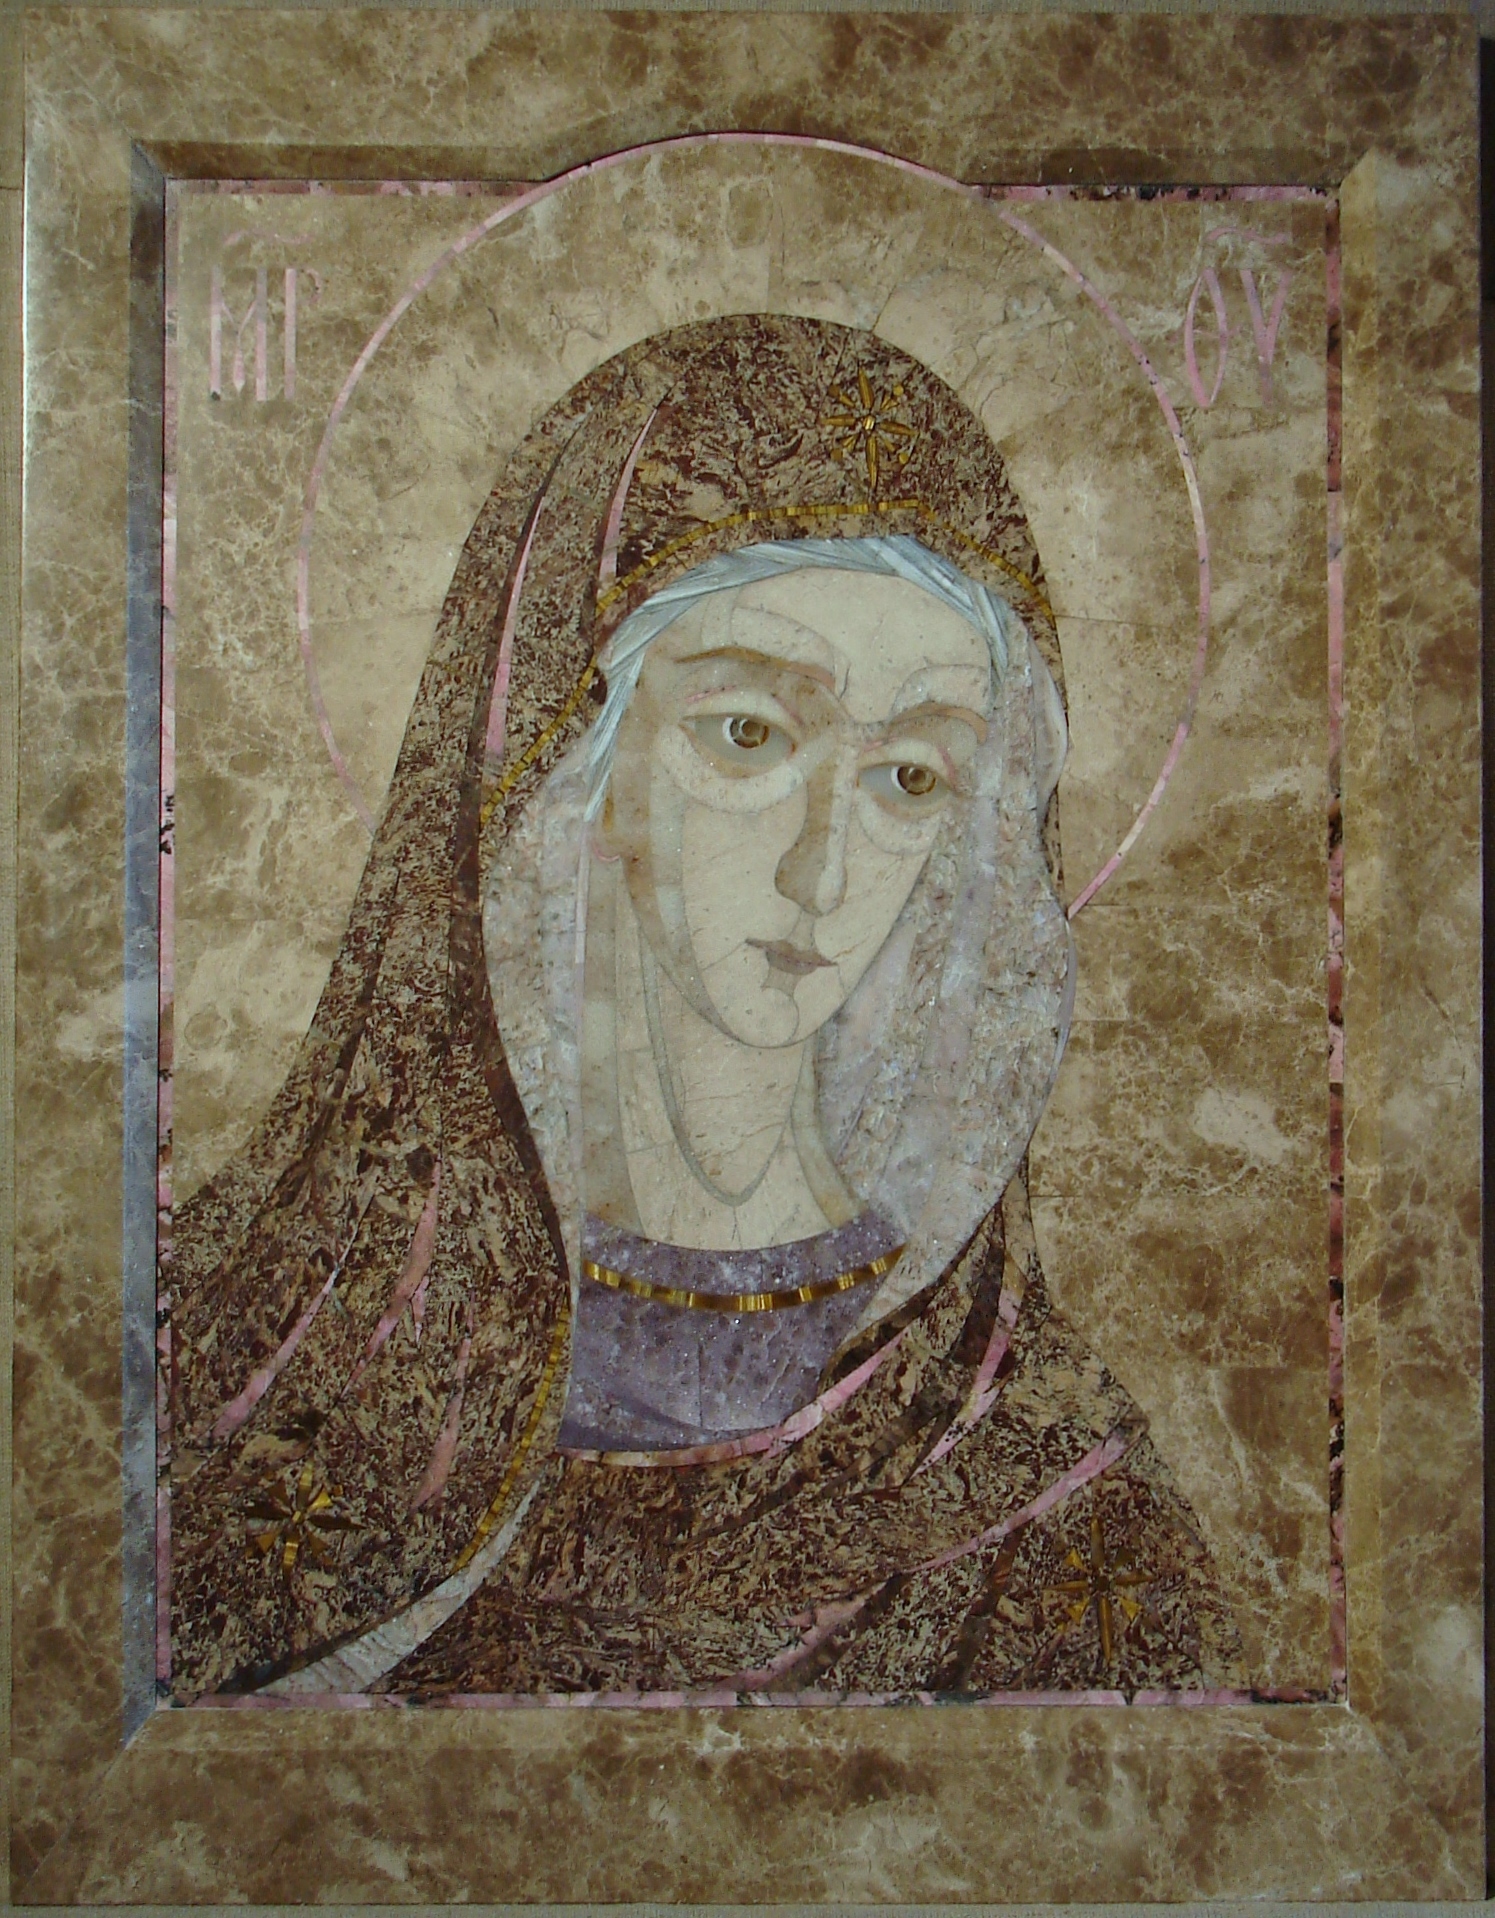 триптих -деисис флорентийские мозаики 3 по 78 х 60 см.